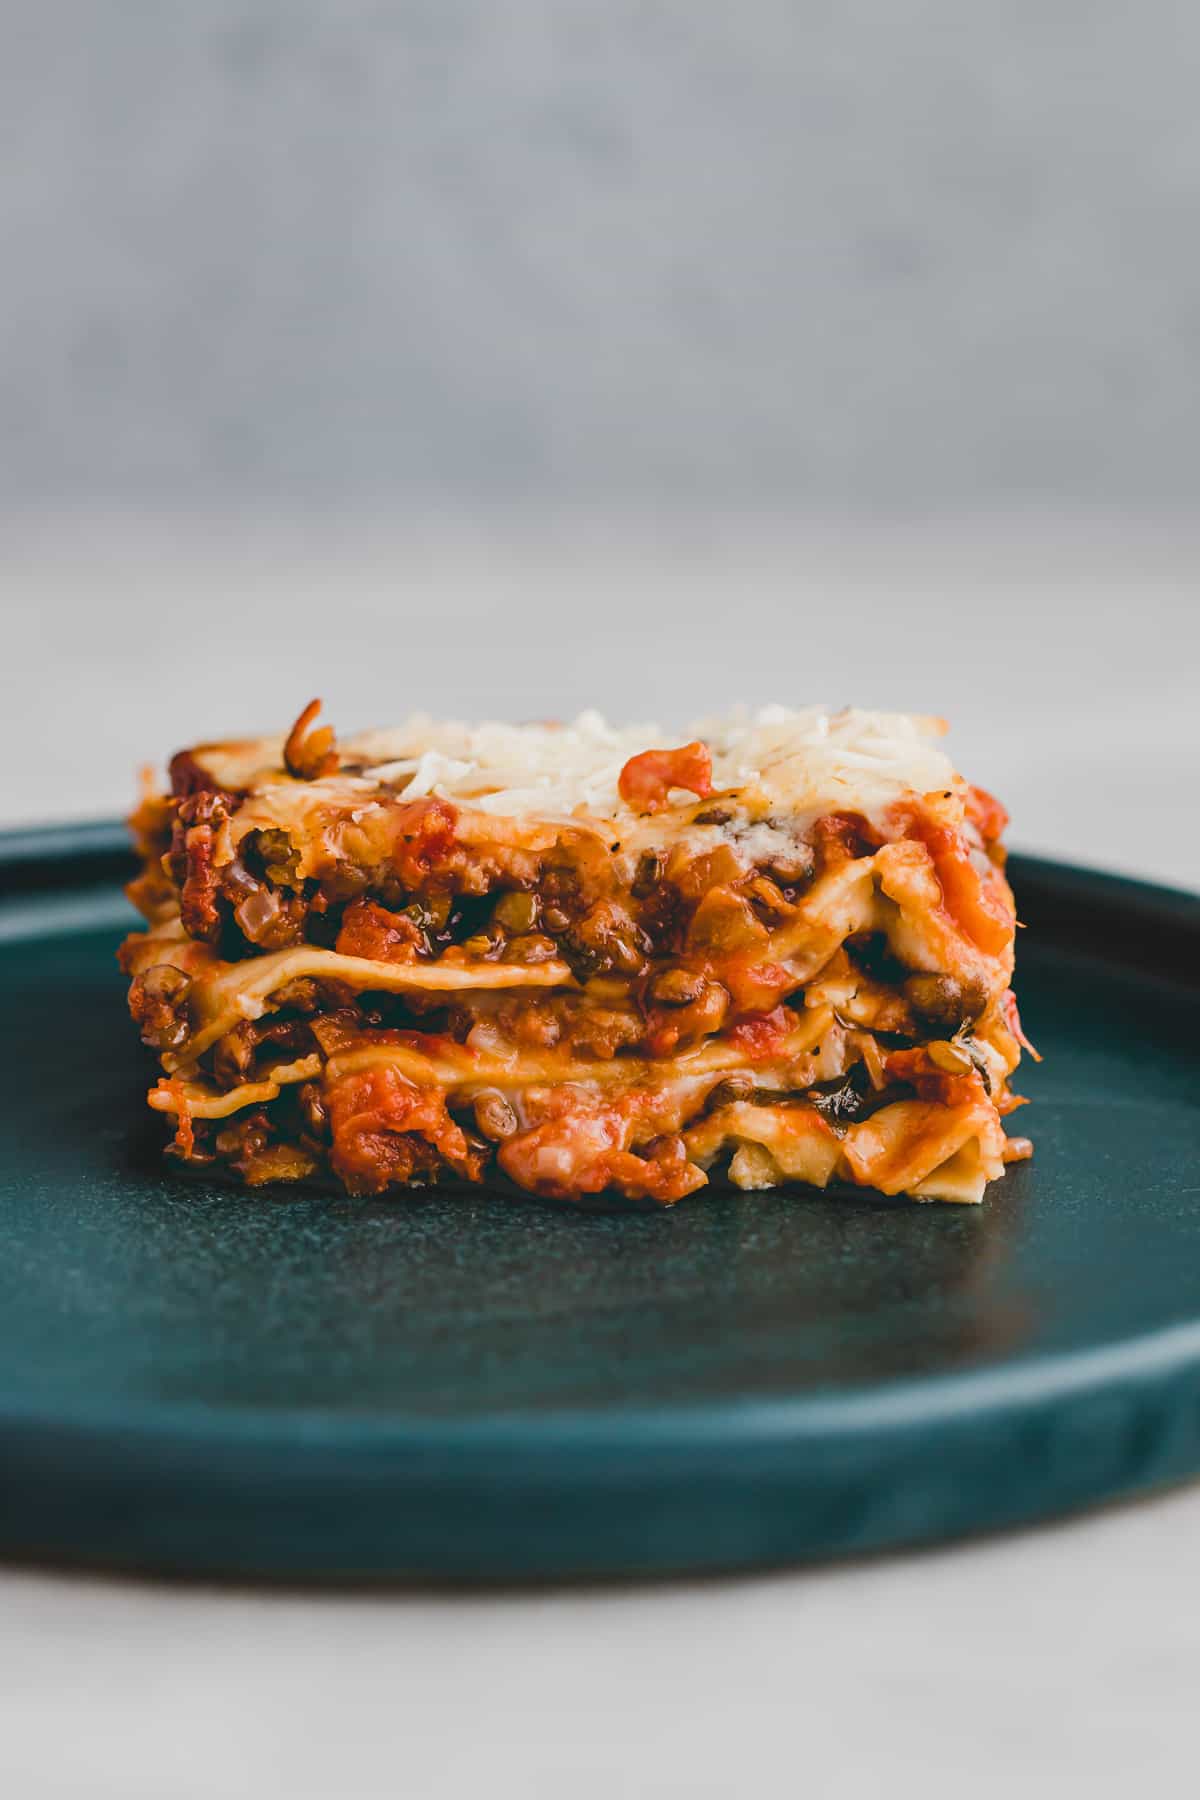 vegan lentil lasagna on a blue plate